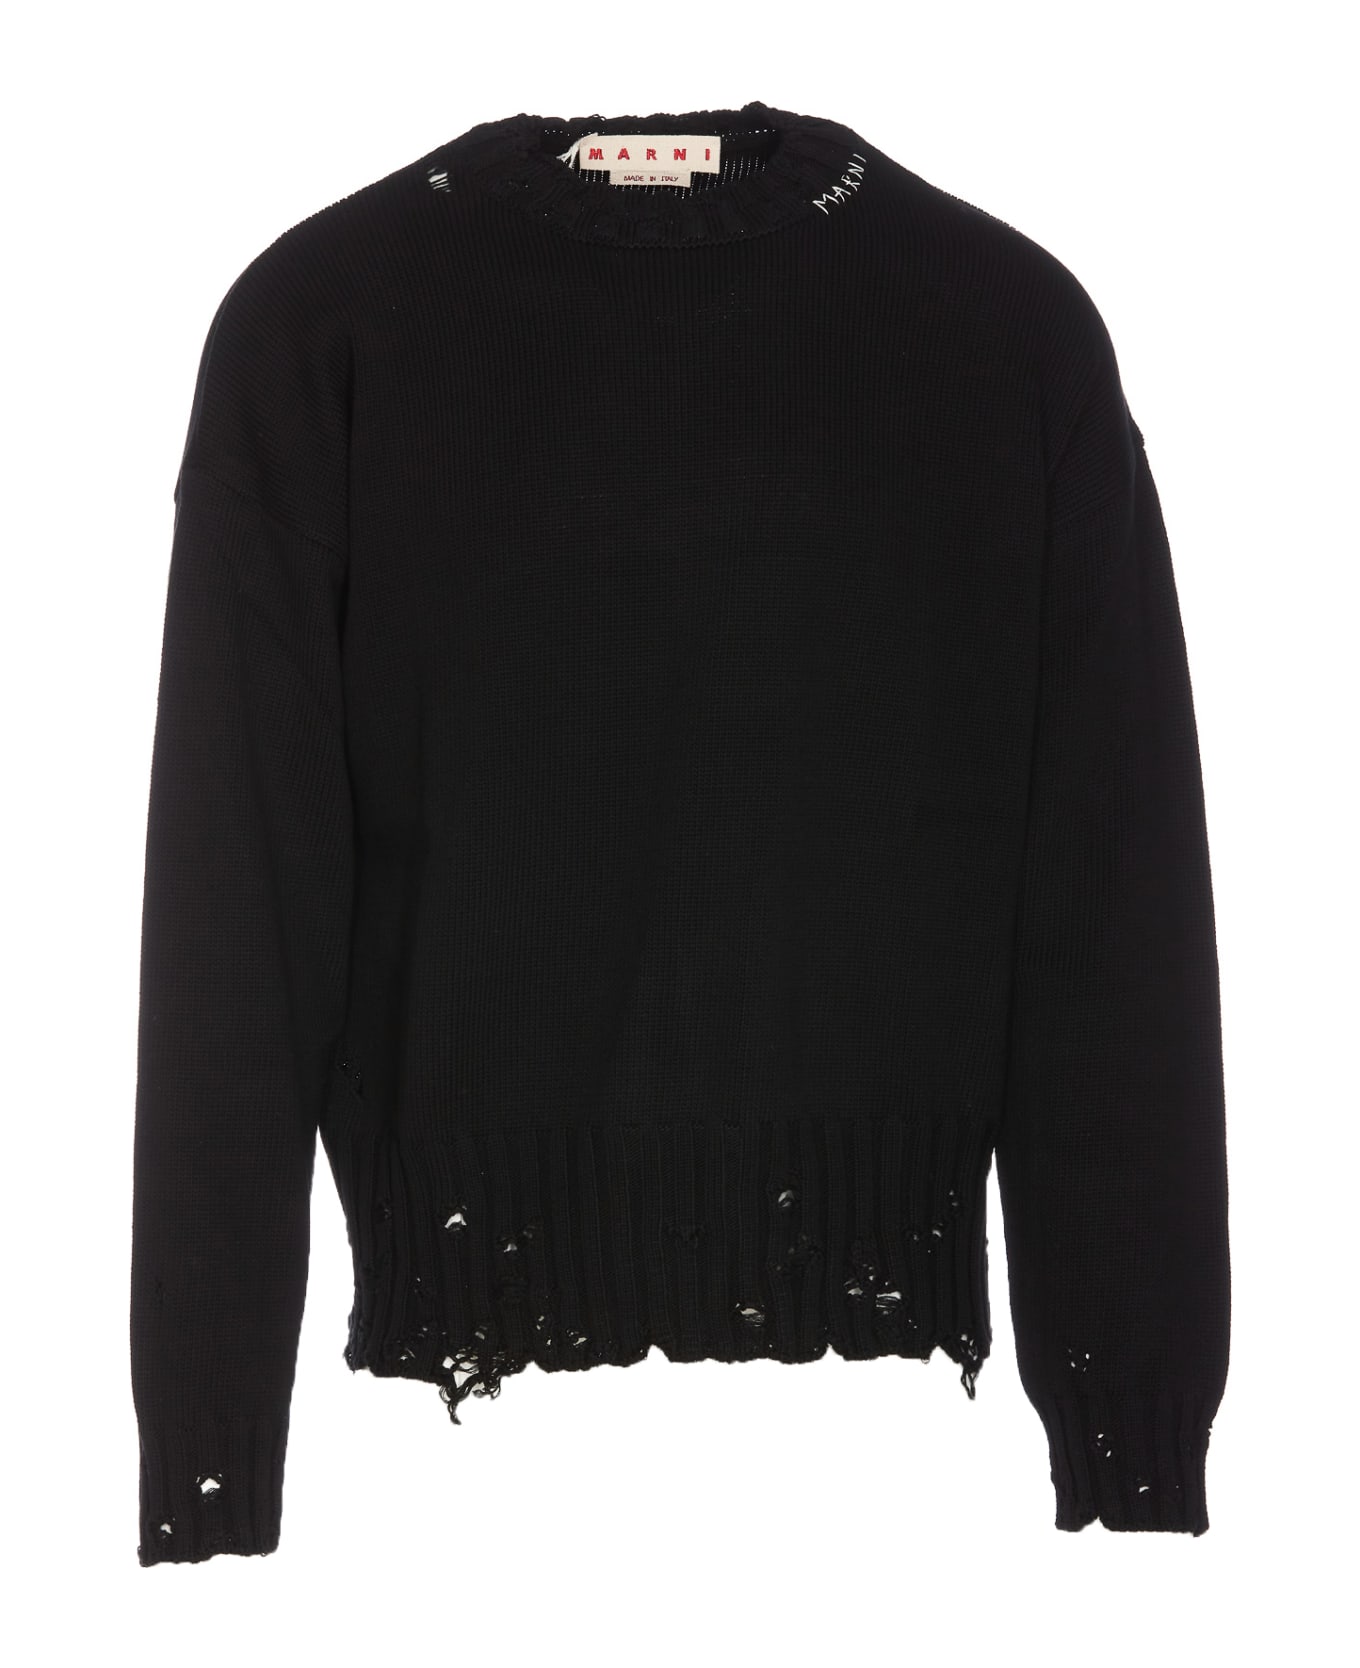 Marni Sweater - Black ニットウェア